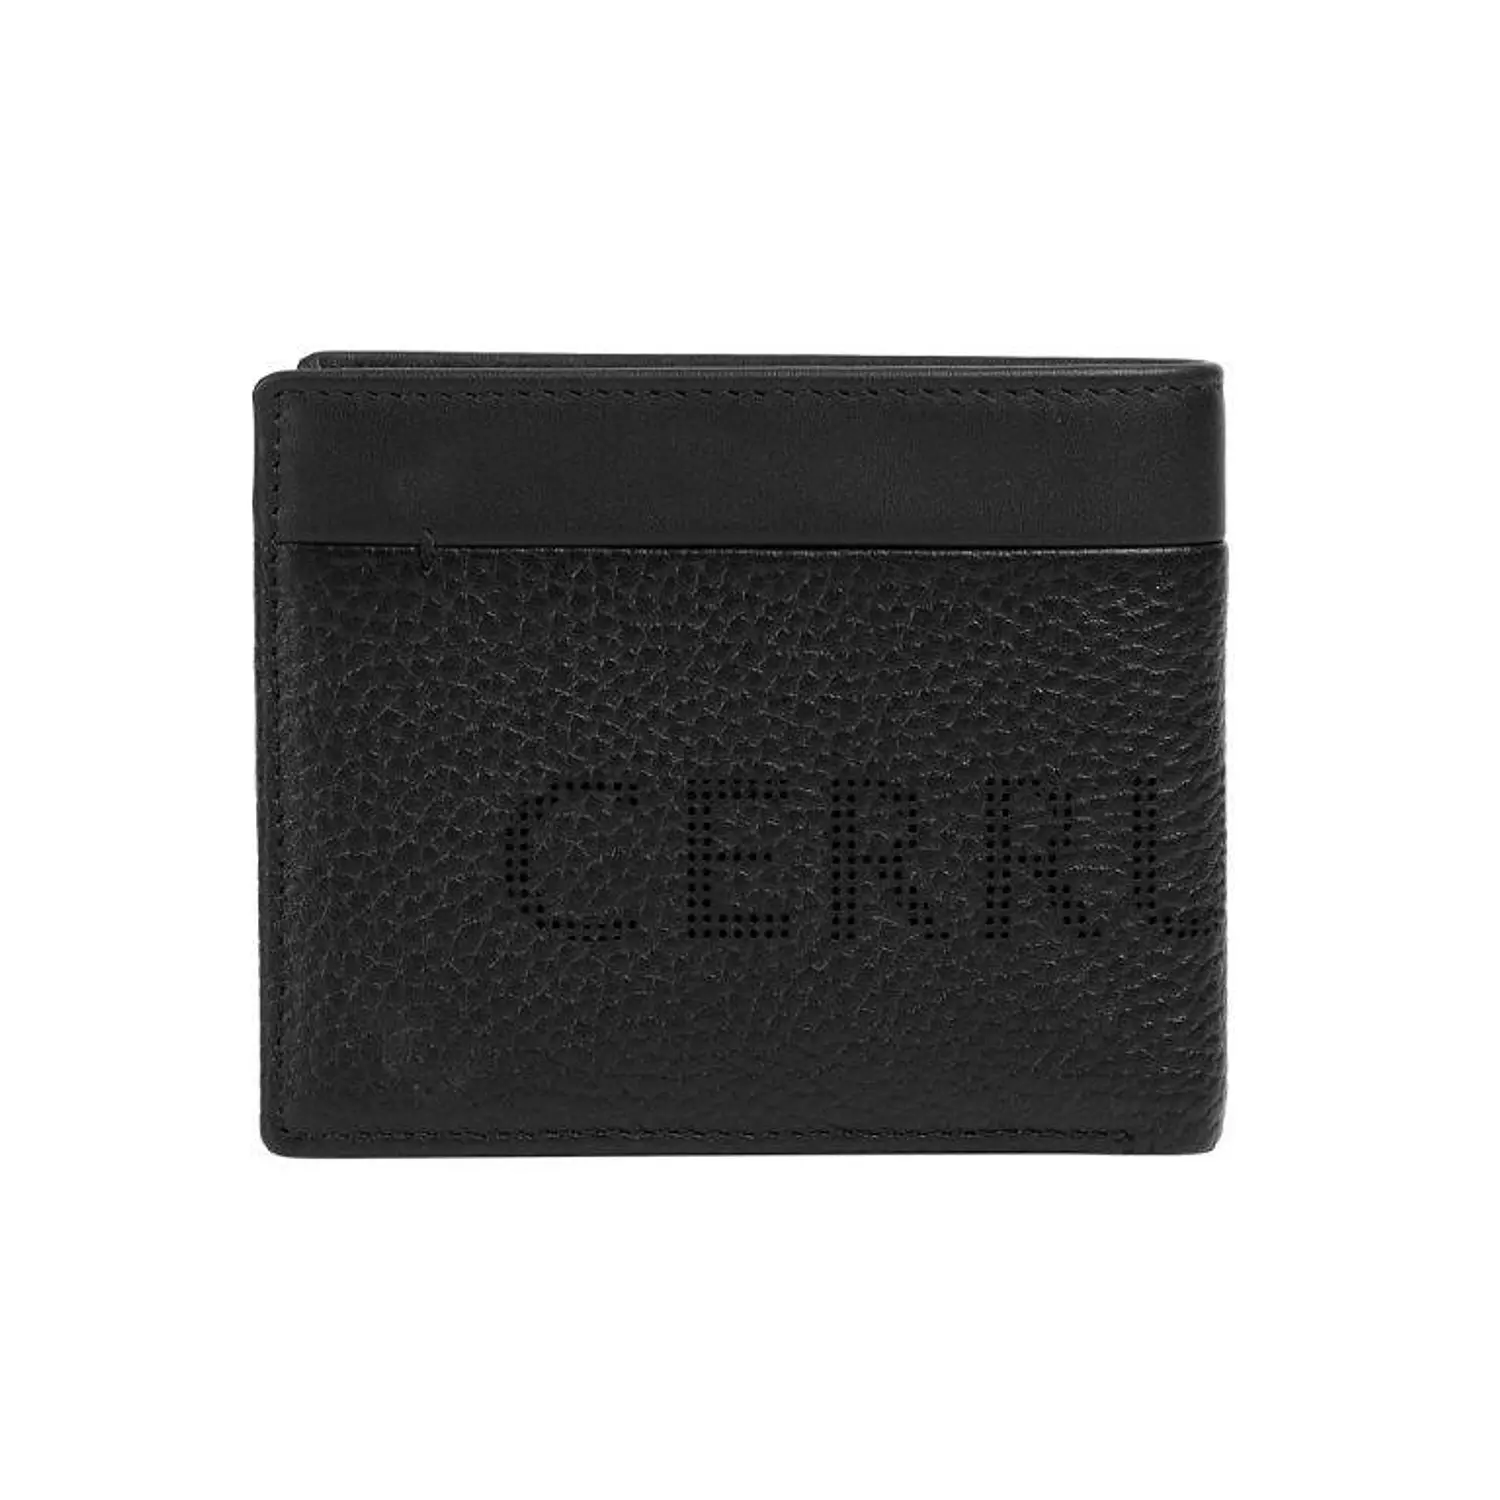 Cerruti1881 - Wallet For Men Calf Leather Black - CEPU05544M 0